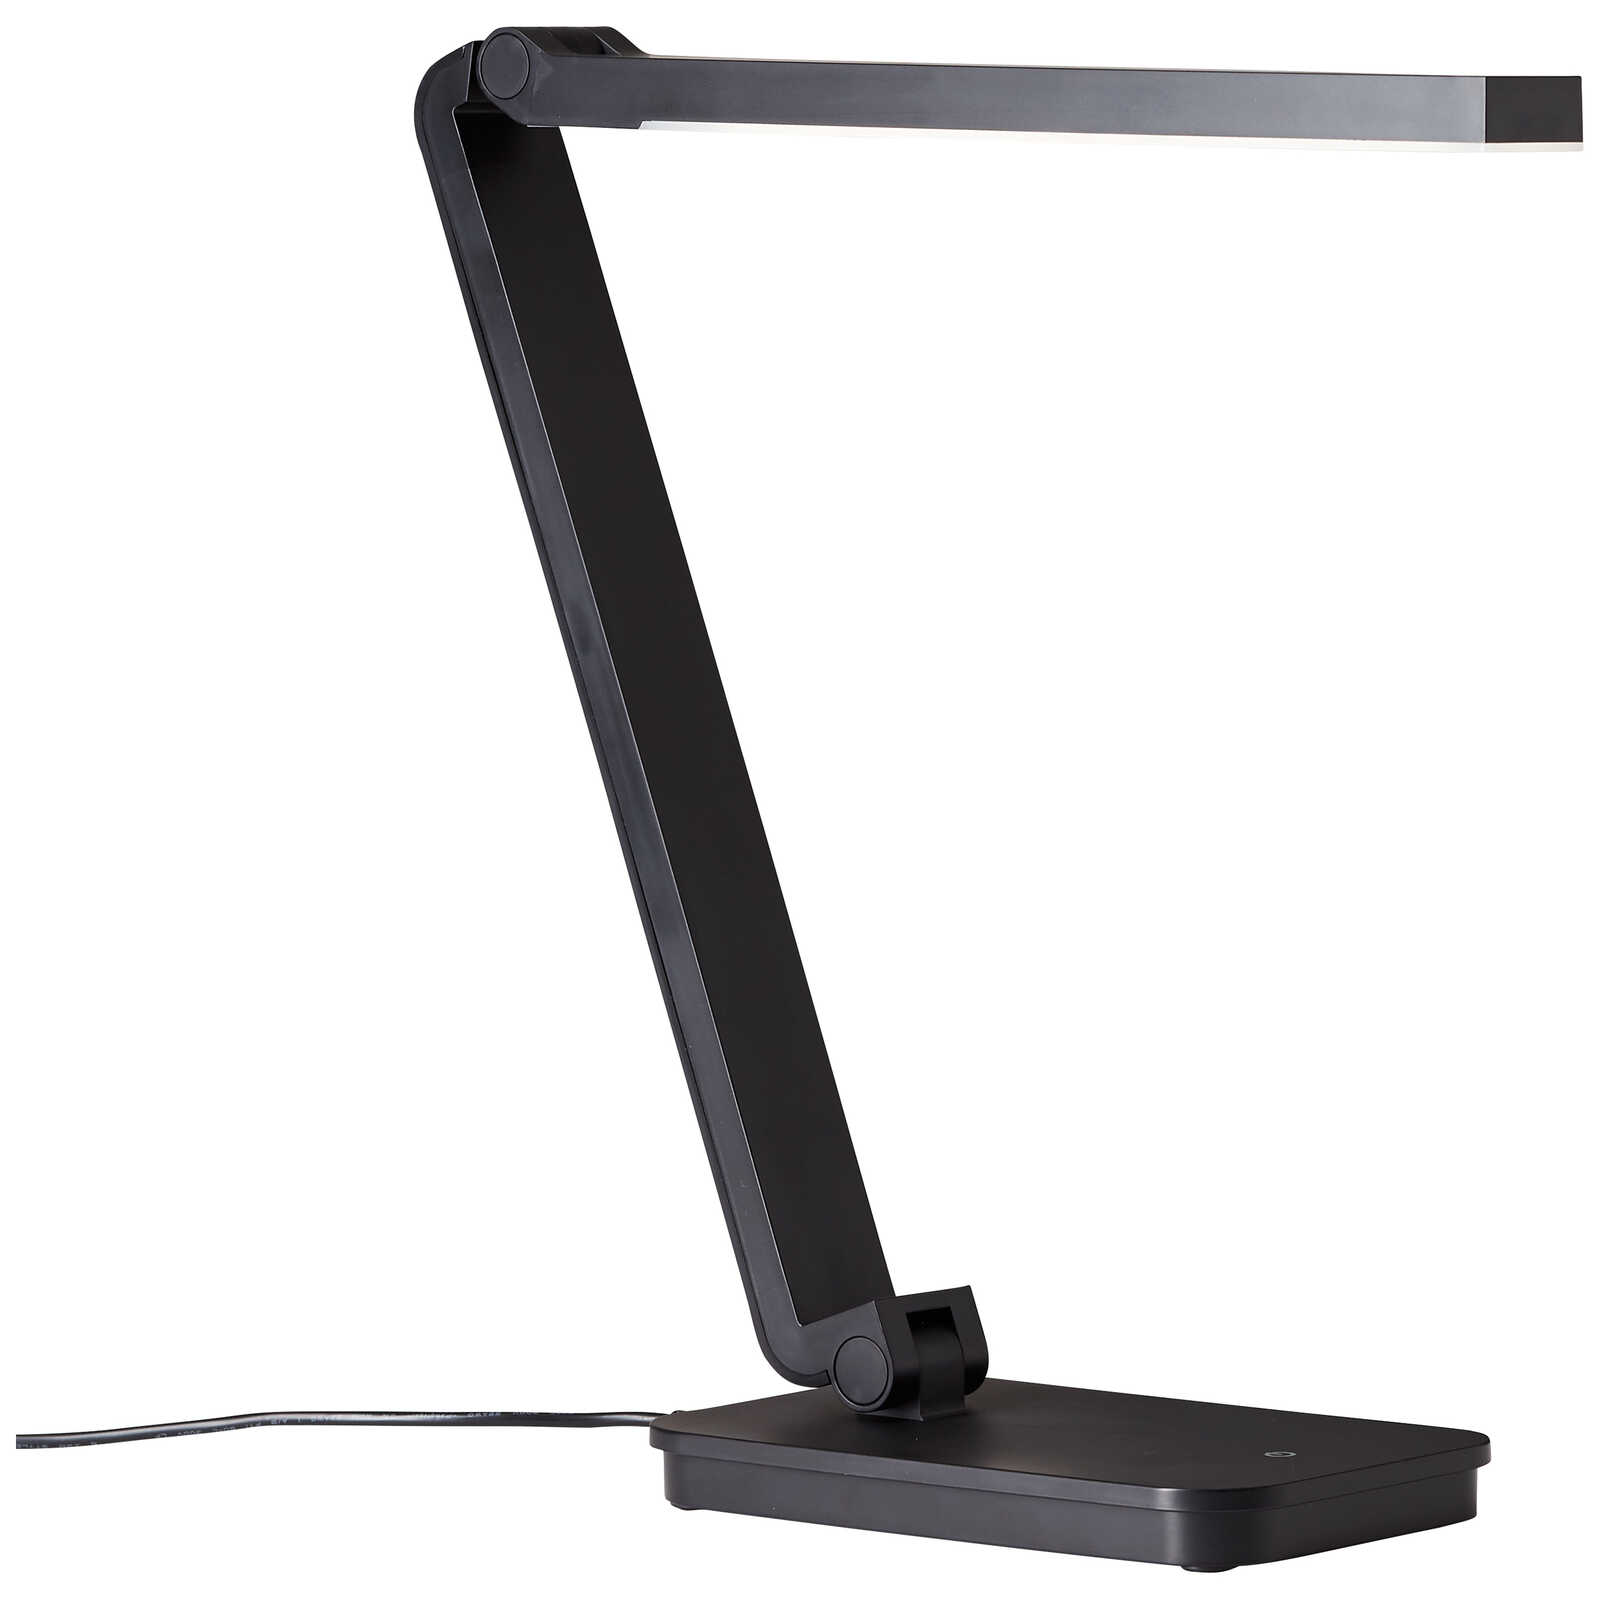             Plastic table lamp - Romy 2 - Black
        